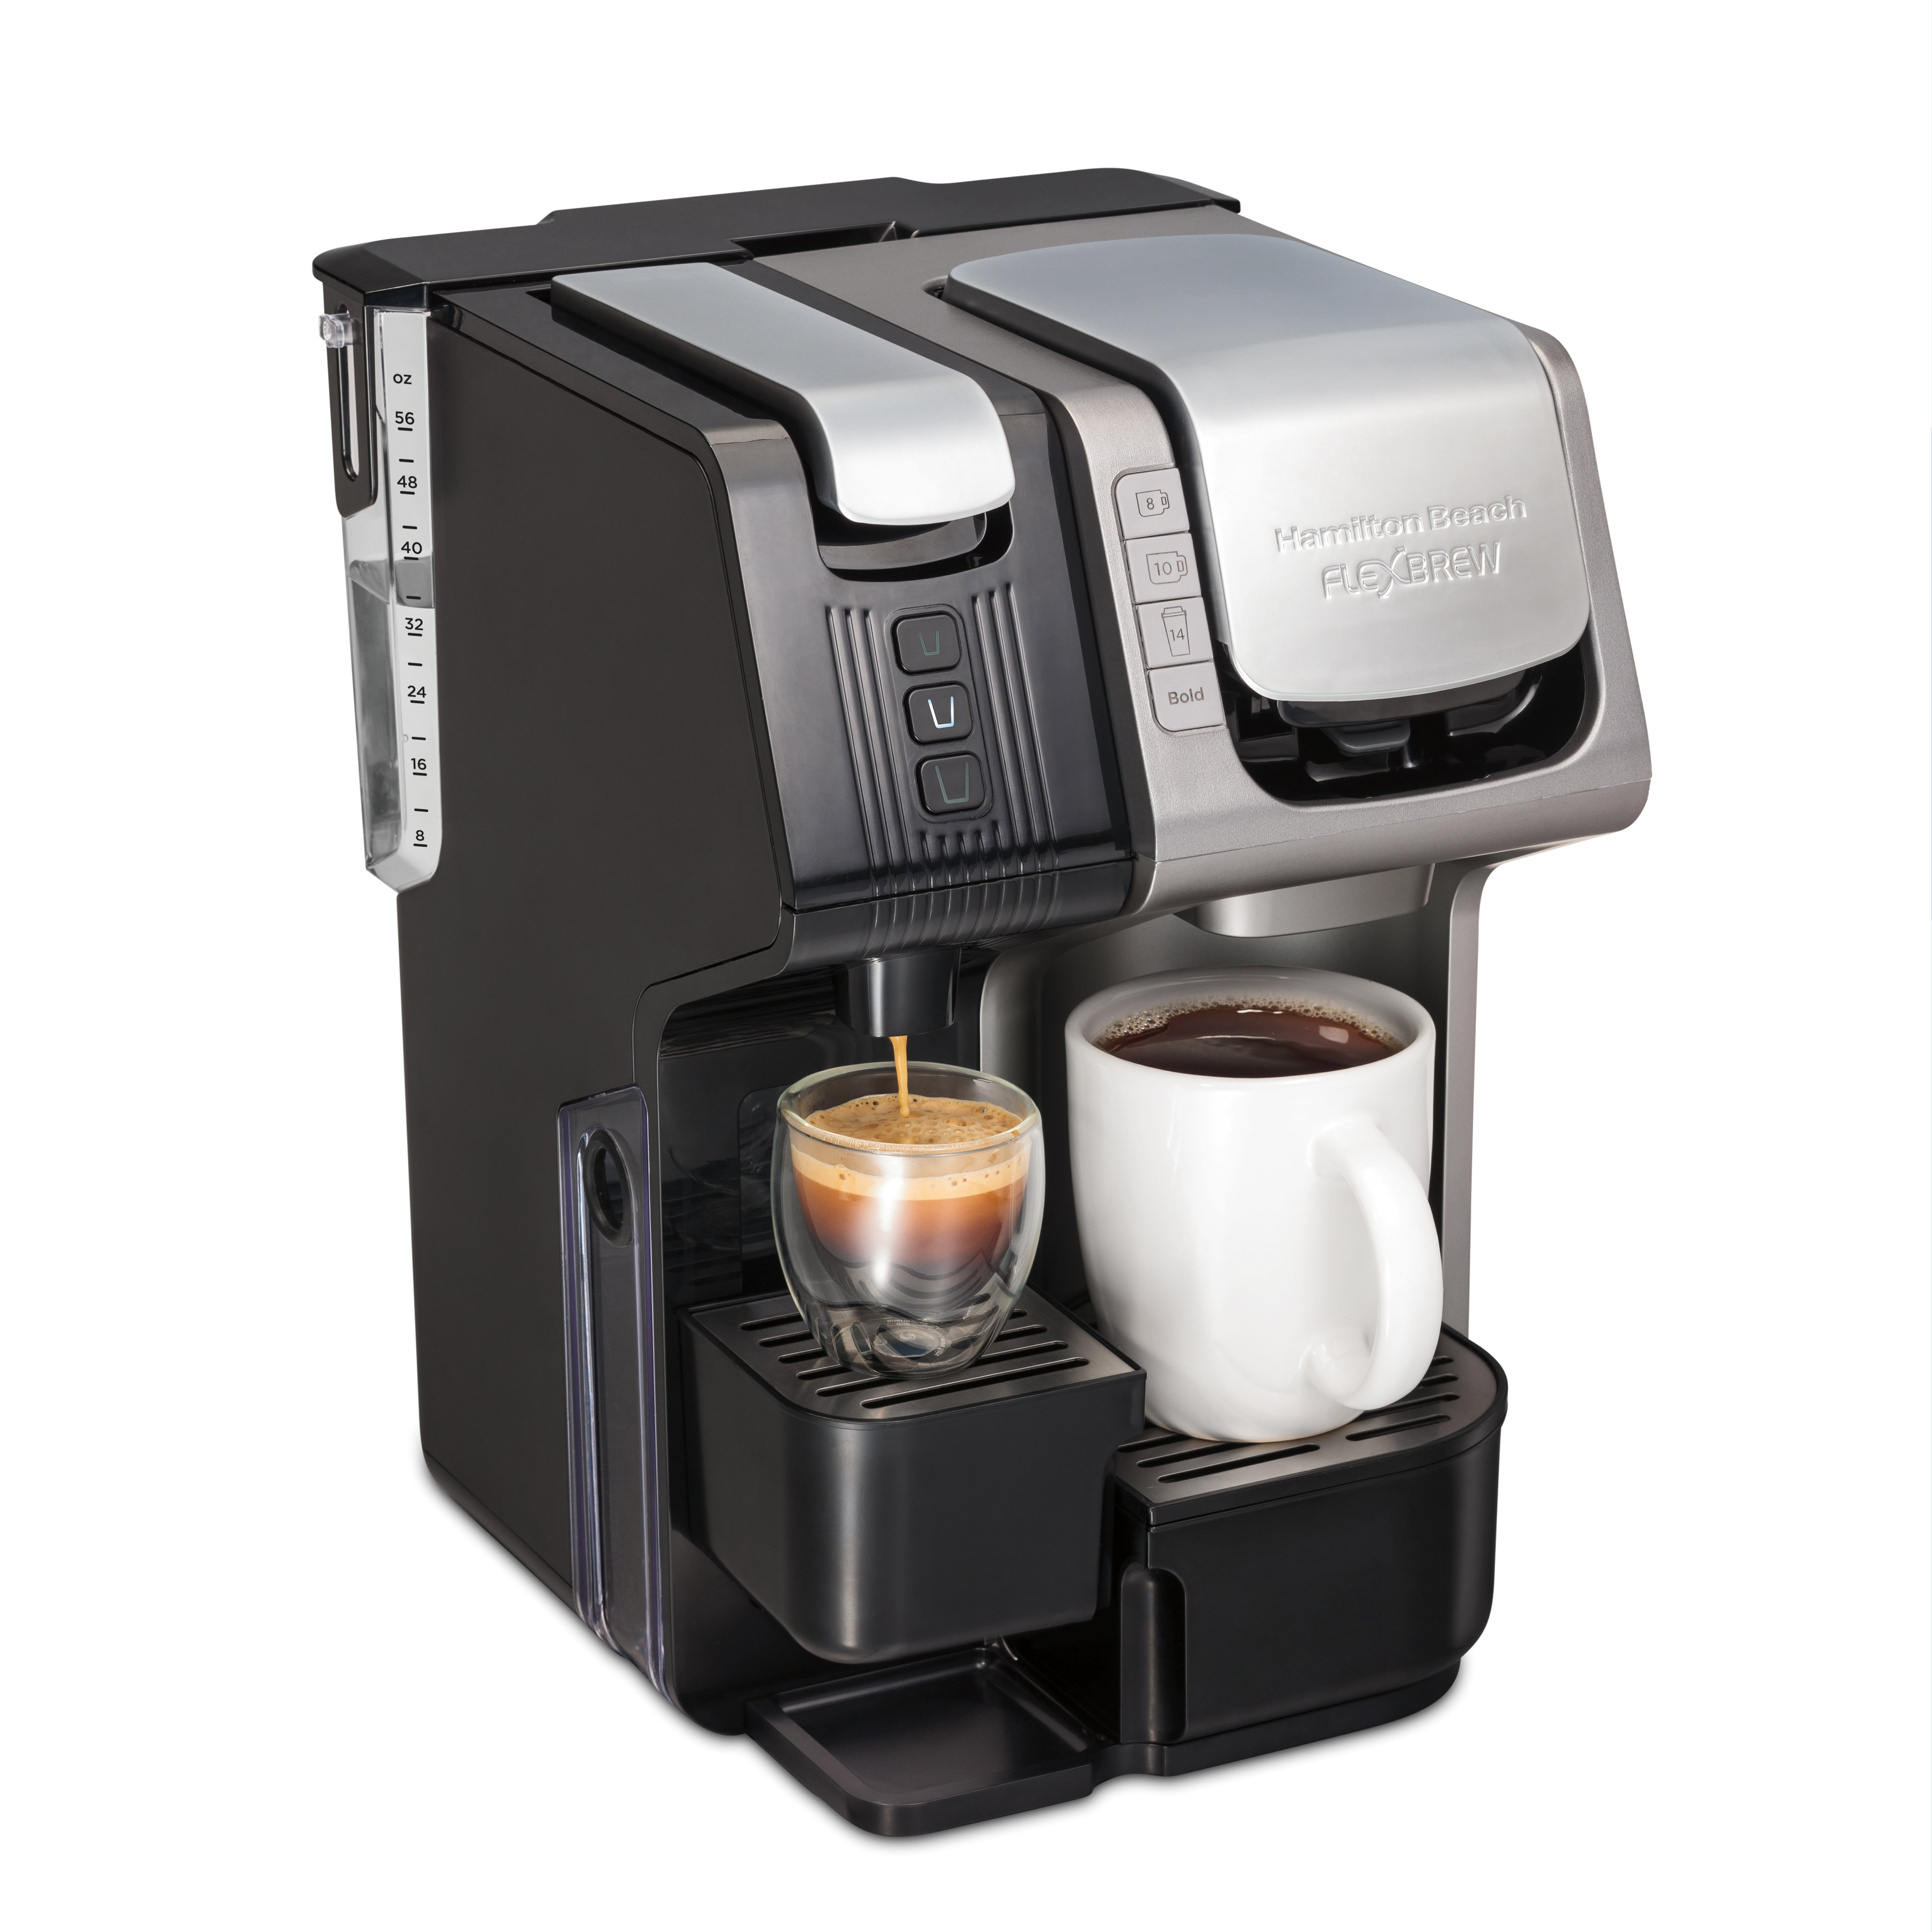 Hamilton Beach Scoop Single Serve Coffee Maker Review 2024